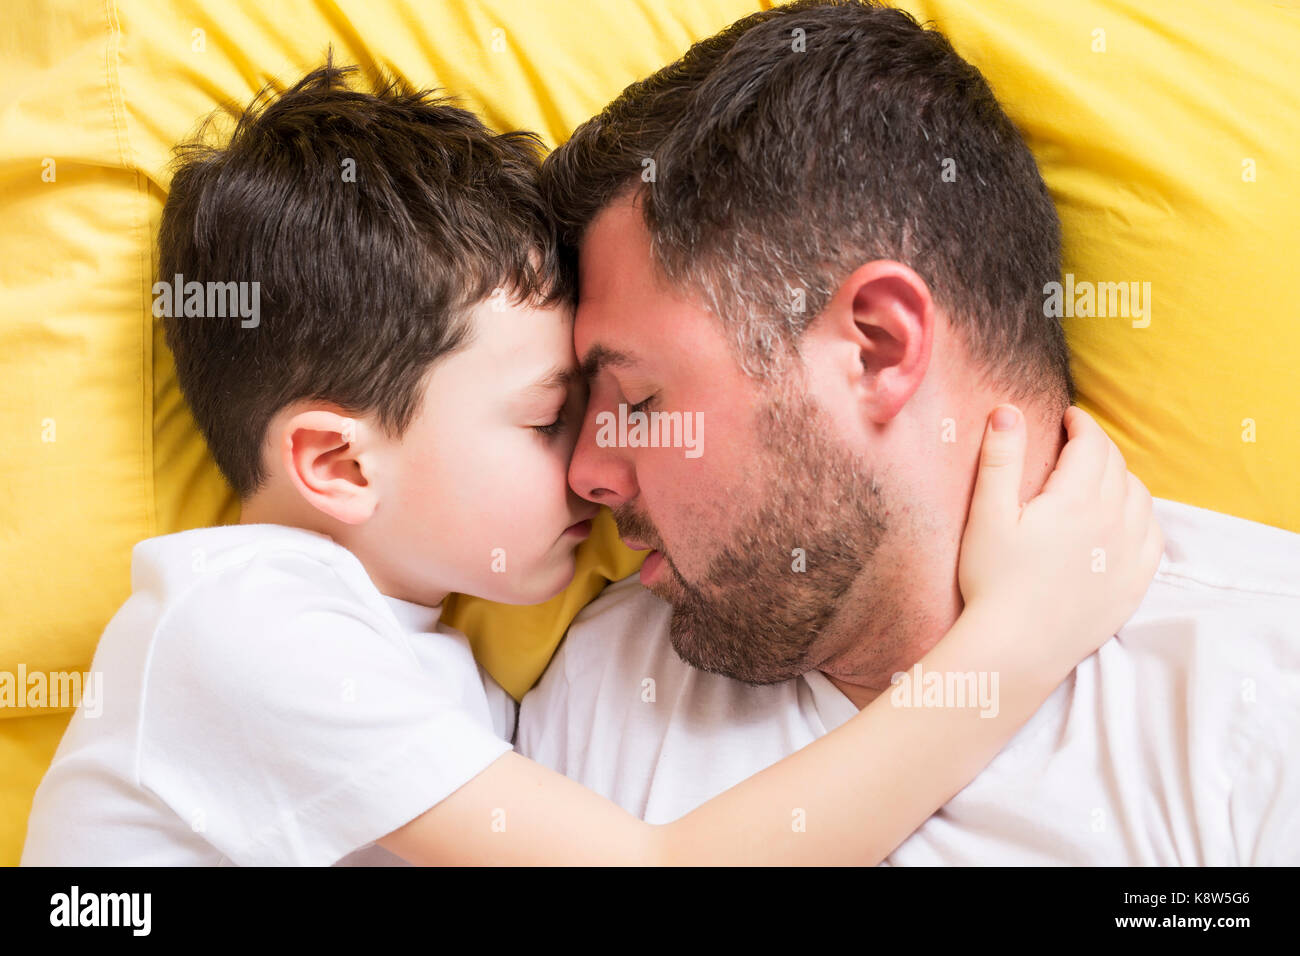 Поцелуй отец сын. Отец и сын поцелуй. Отцовский поцелуй. Поцелуй отца и сына подростка. Папа целует сына.